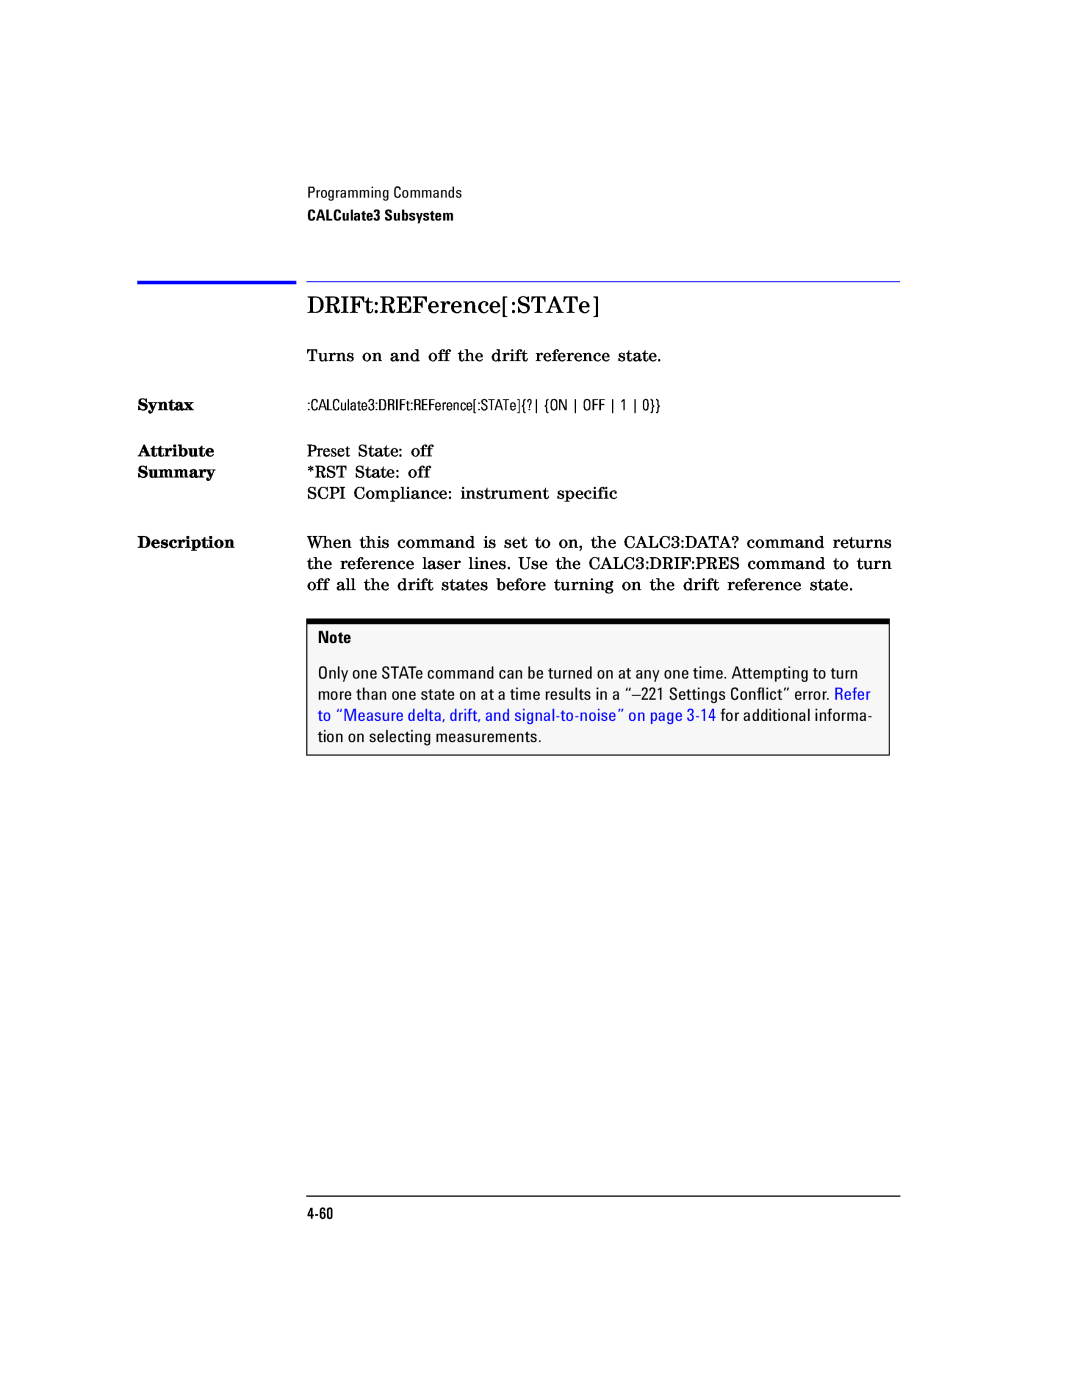 Agilent Technologies Agilent 86120C manual DRIFtREFerenceSTATe, Syntax, Attribute, Summary, Description 